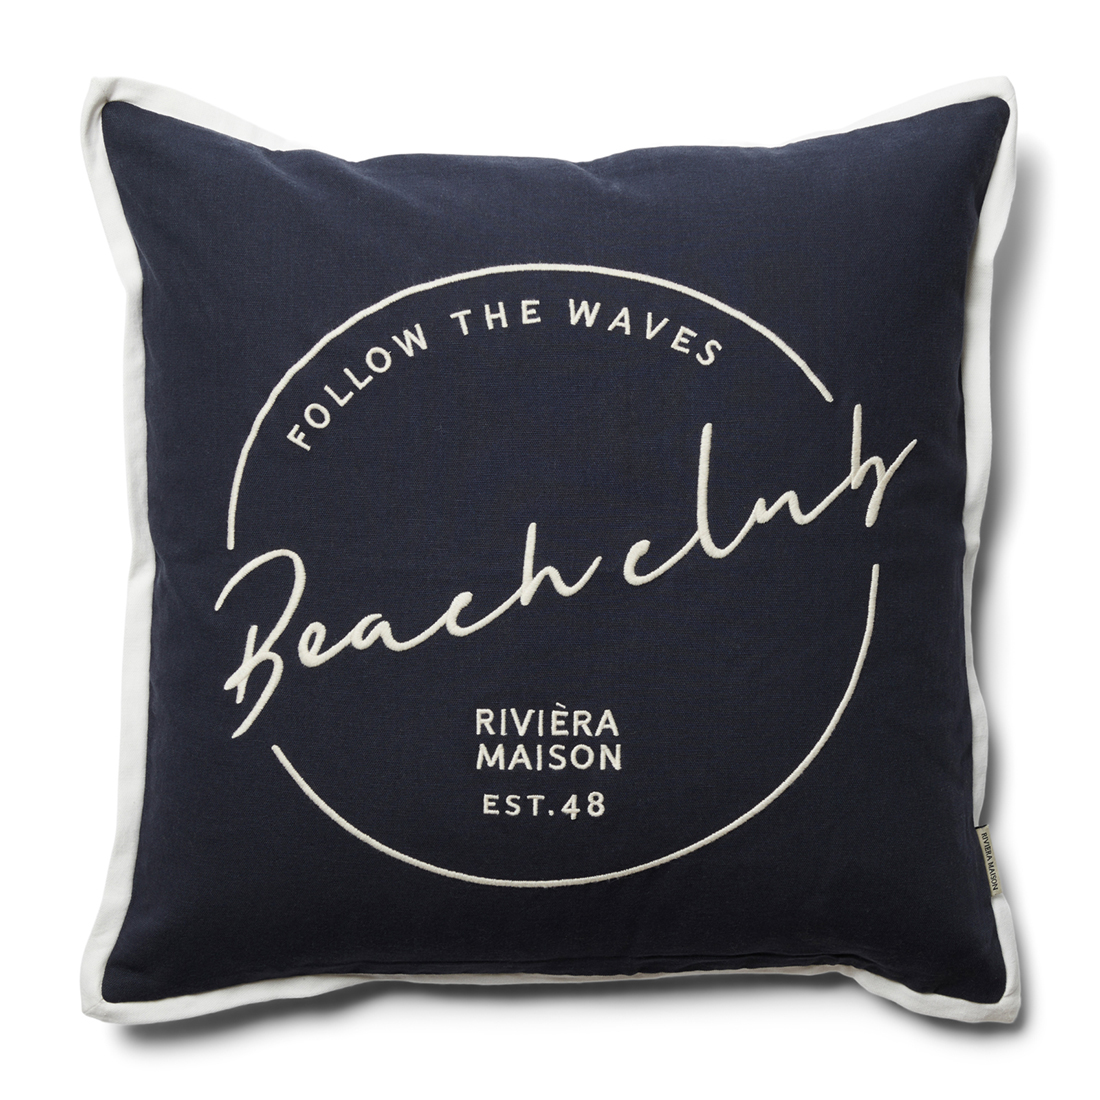 Riviera Maison kussenhoes, Kussensloop 50x50, Sierkussen met tekst - RM Beach Club Pillow Cover - Donkerblauw - Katoen